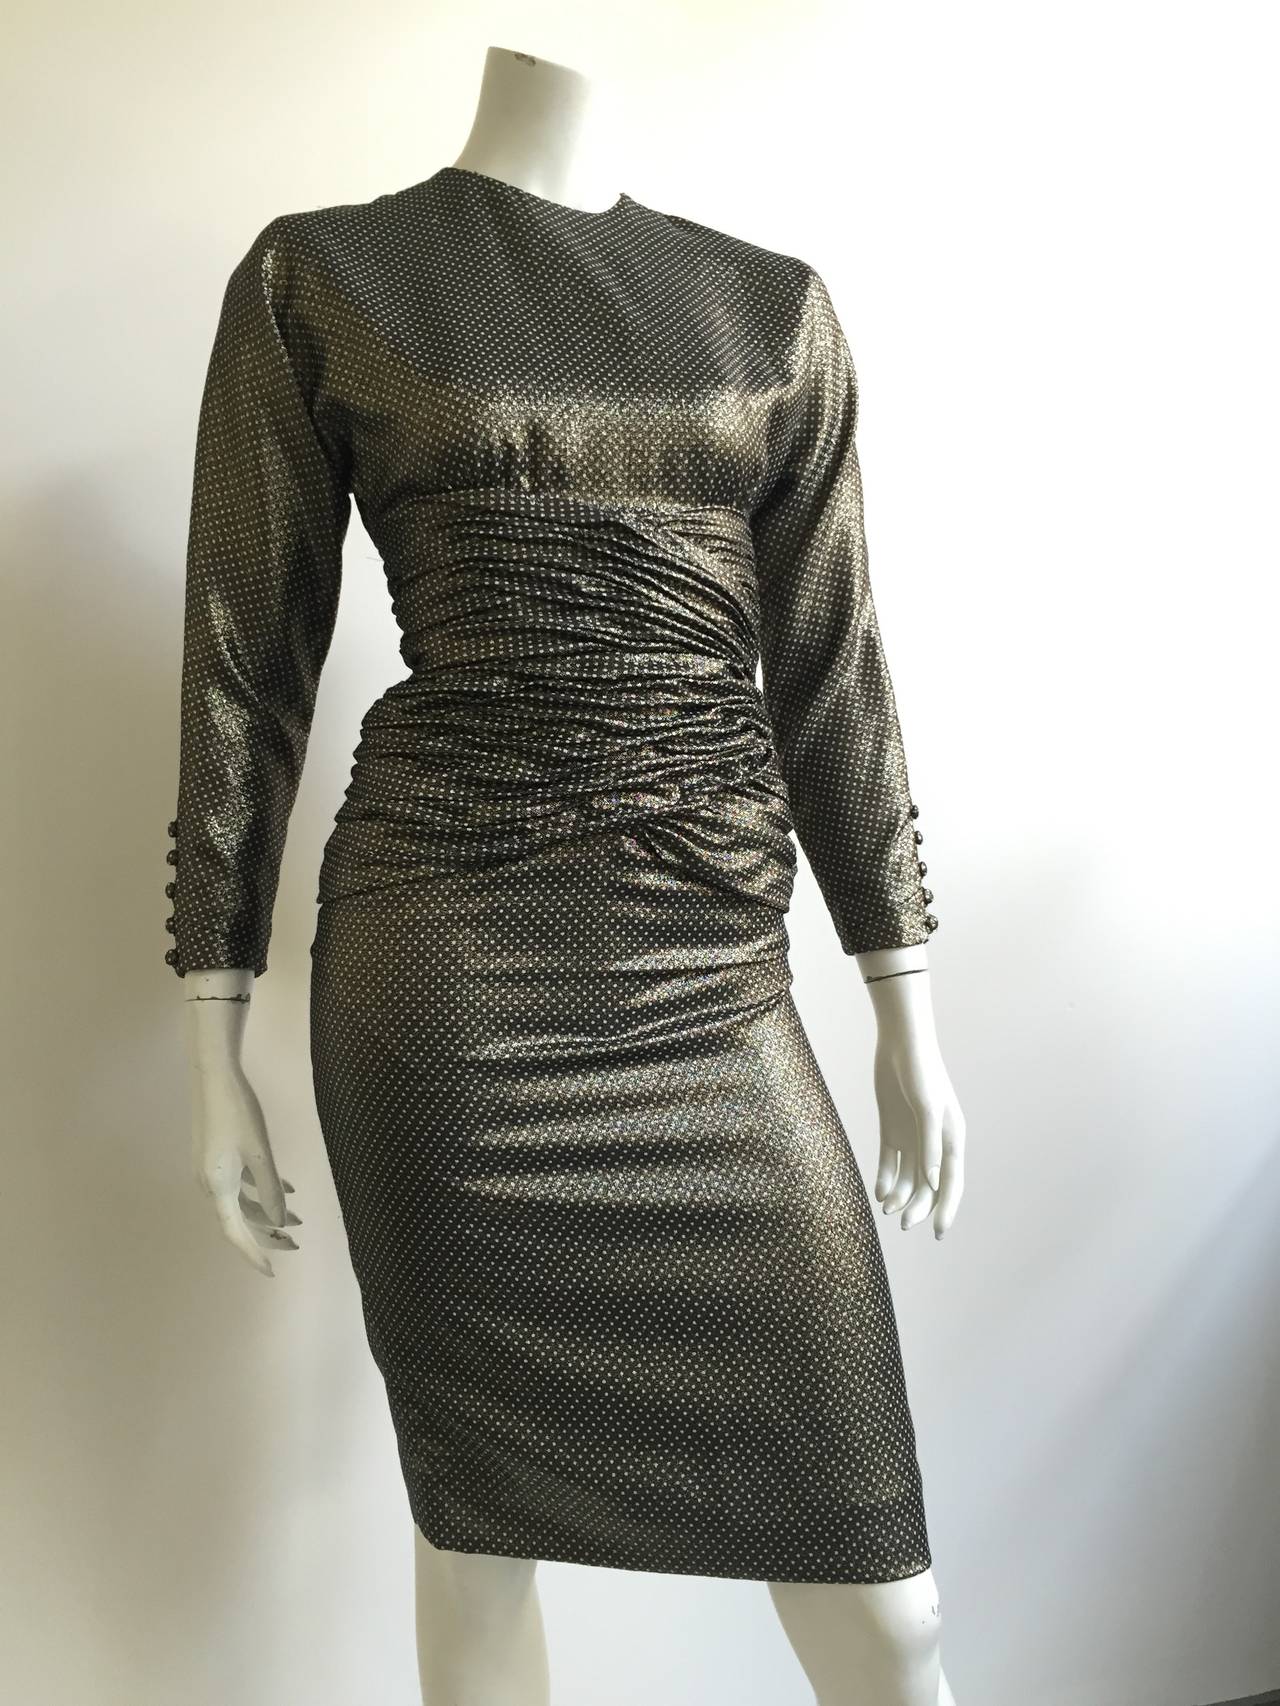 Black Carolyne Roehm 80s Evening Cocktail Dress Size 4.